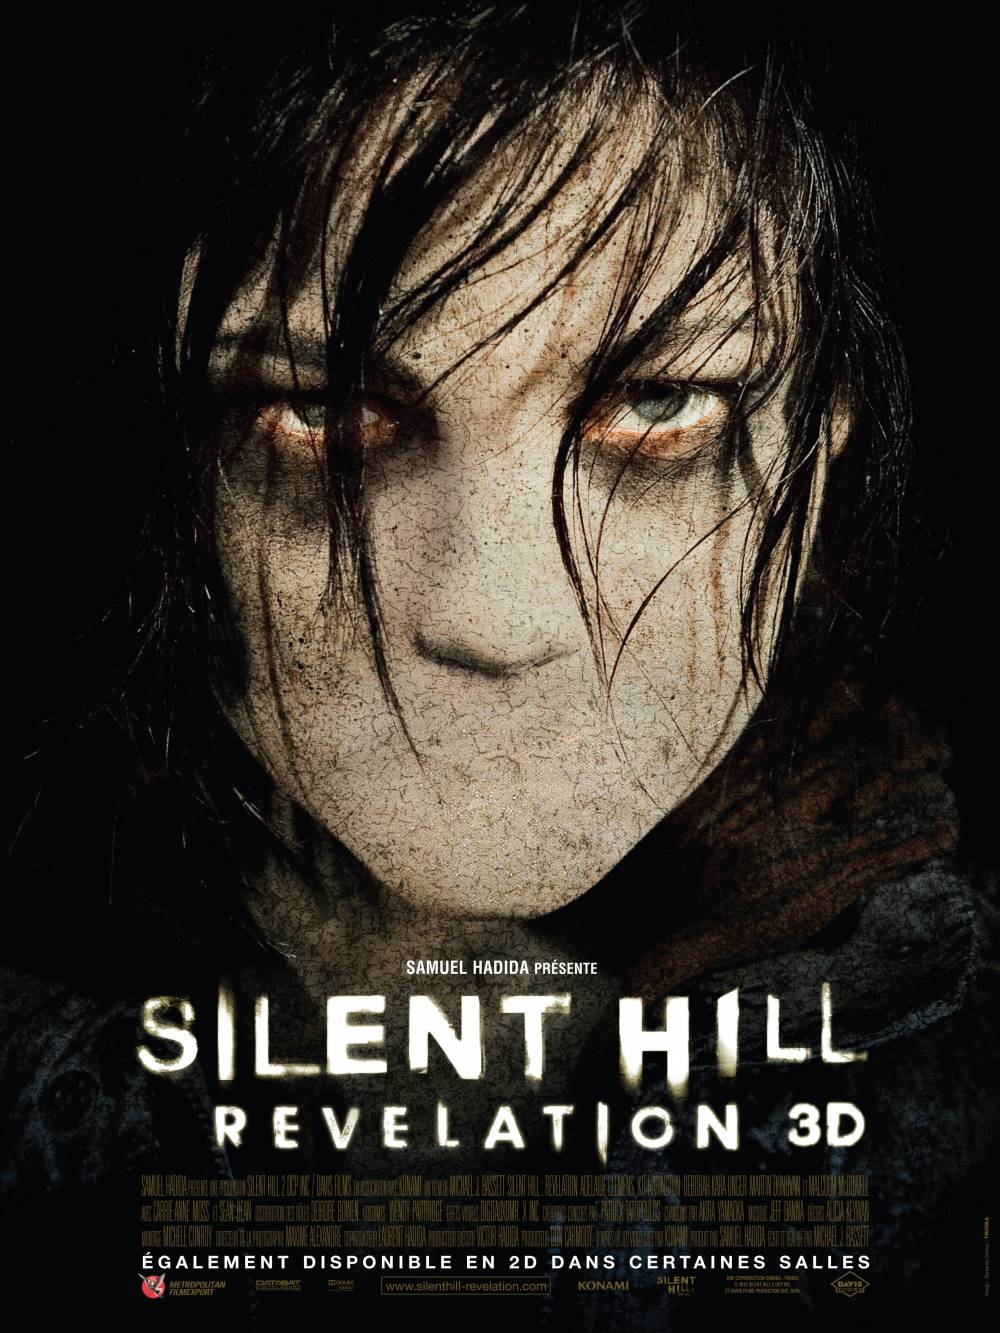 Silent Hill Revelation 3D Movie Review